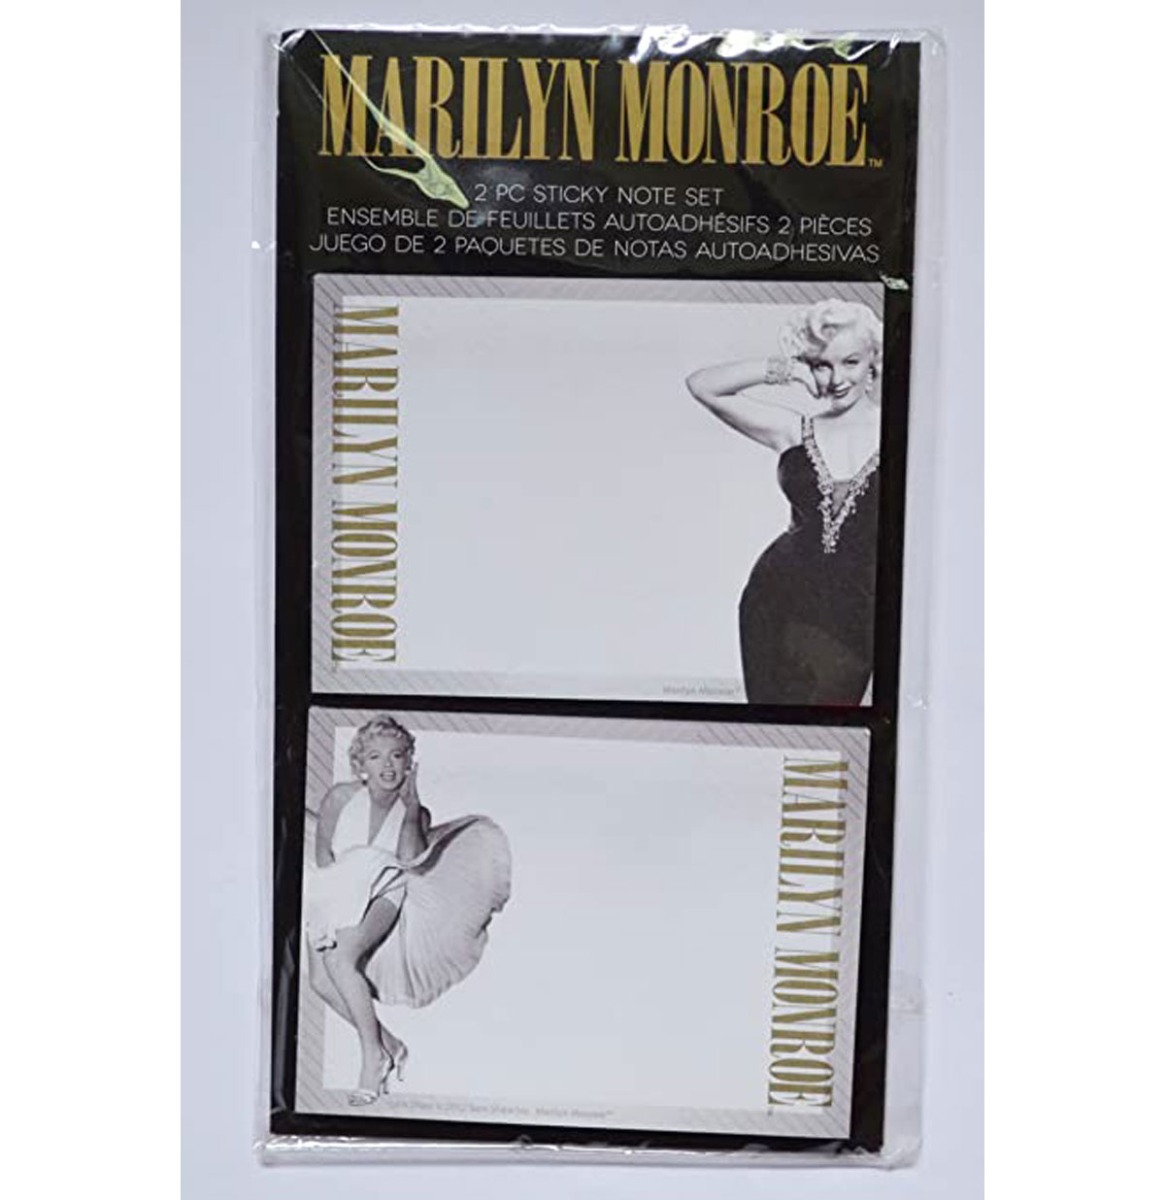 Marilyn Monroe 2 PC Sticky Note Set